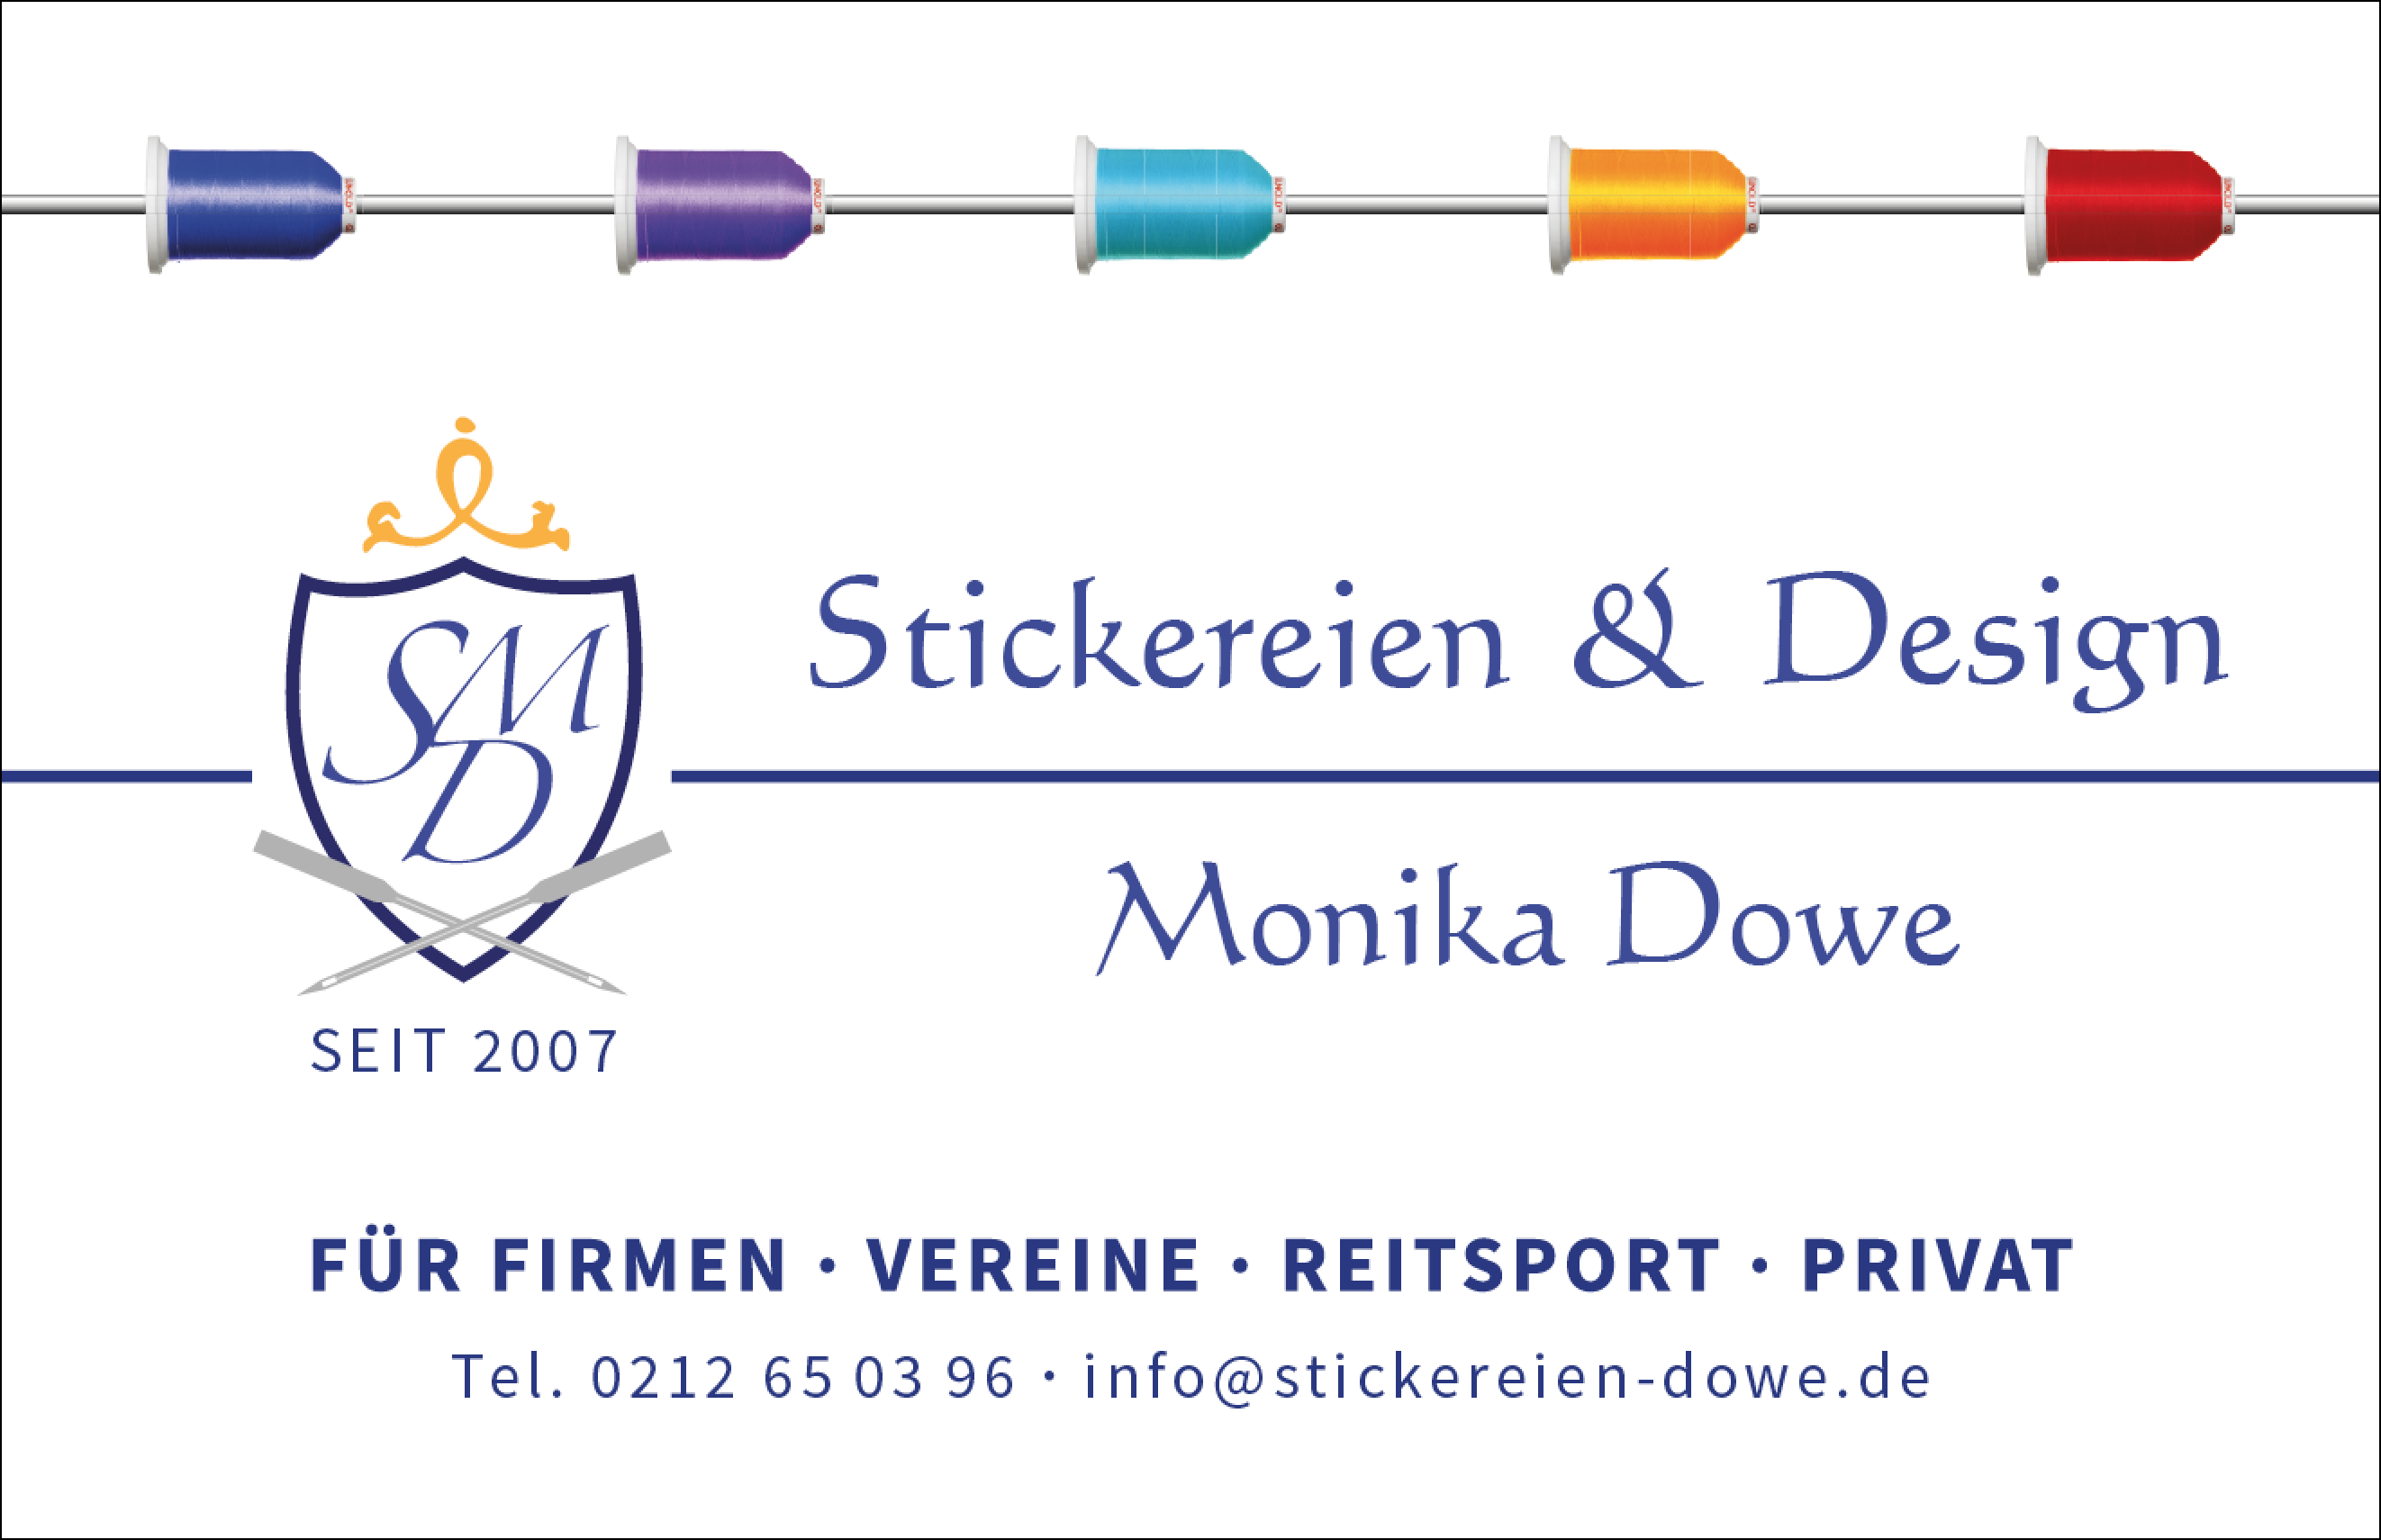 Stickereien & Design - Monika Dowe